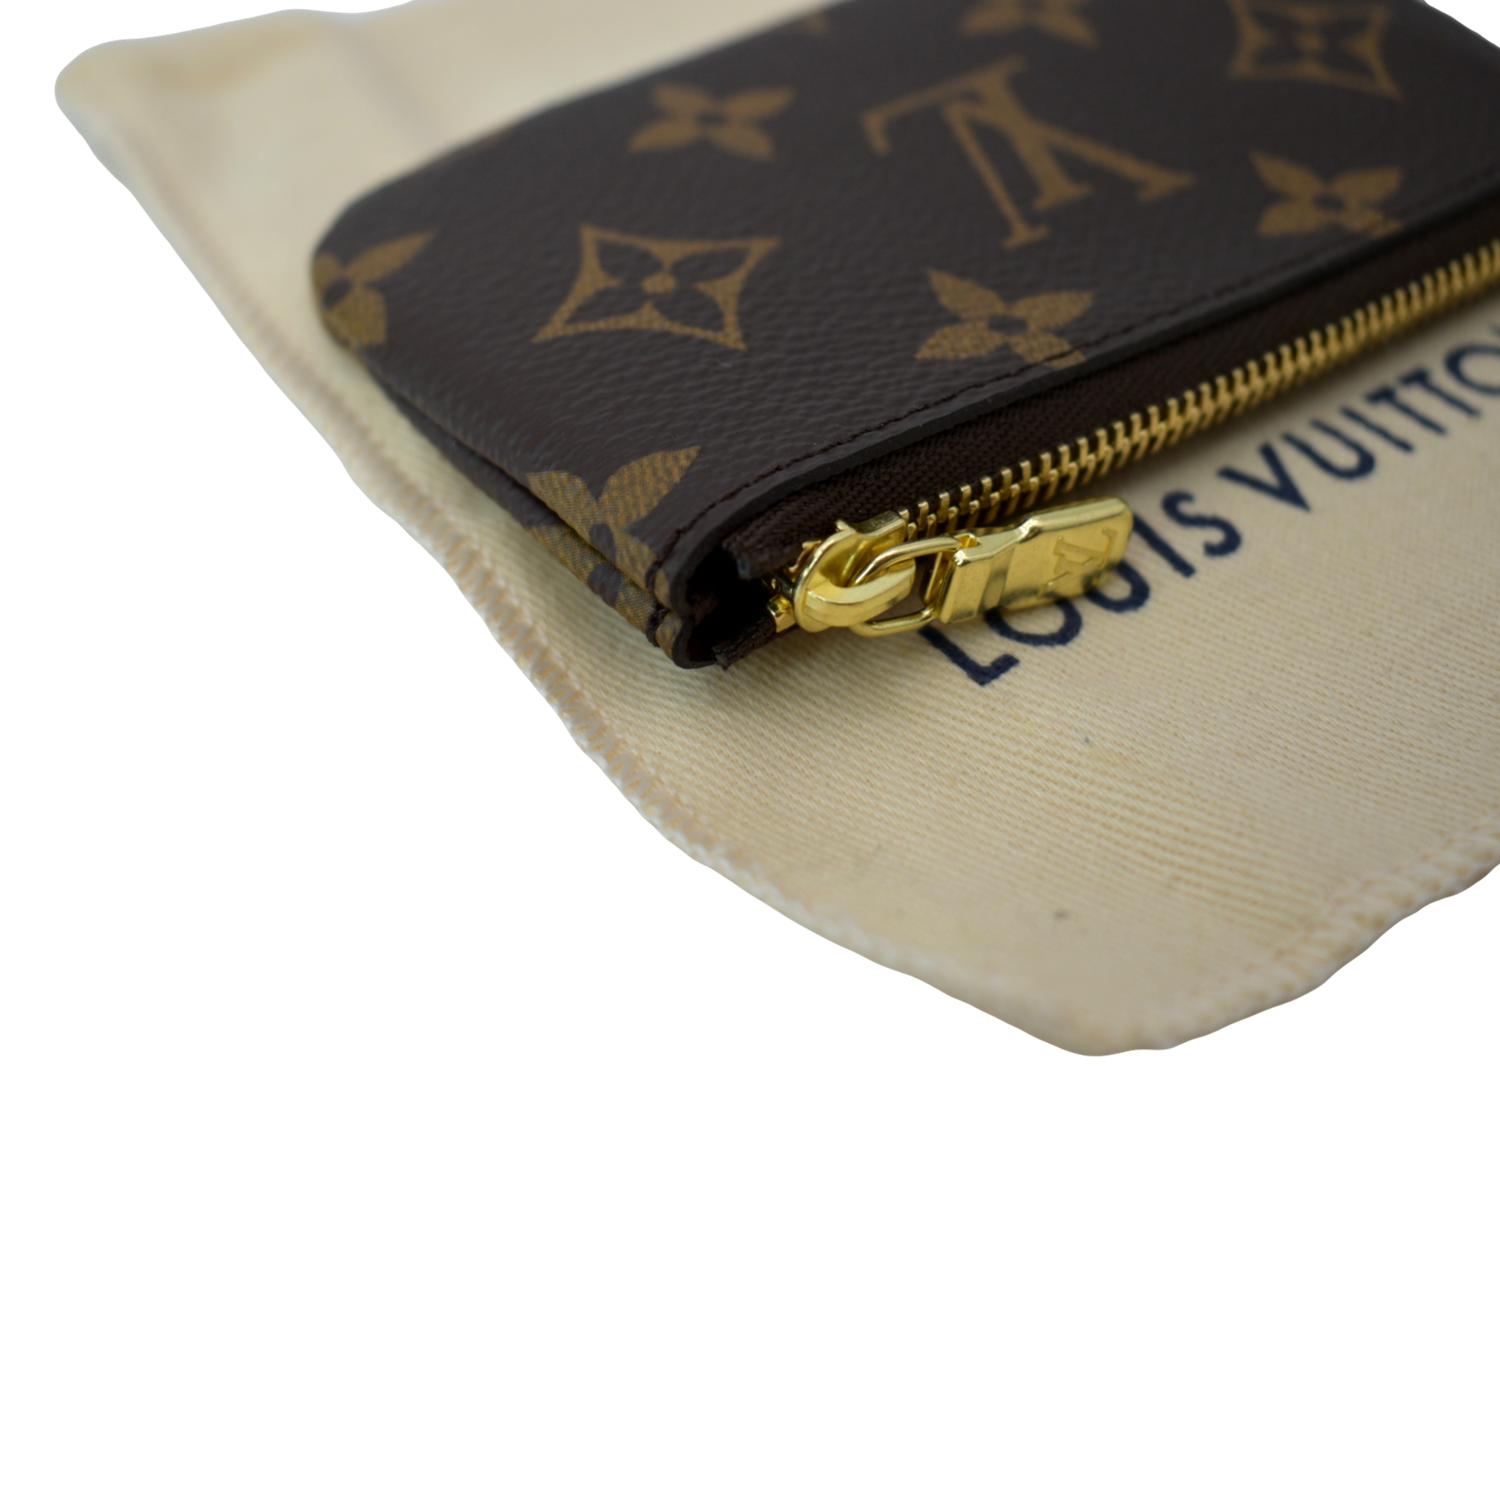 AUTHENTIC LOUIS VUITTON “LV” COIN CASE for Sale in Dallas, TX